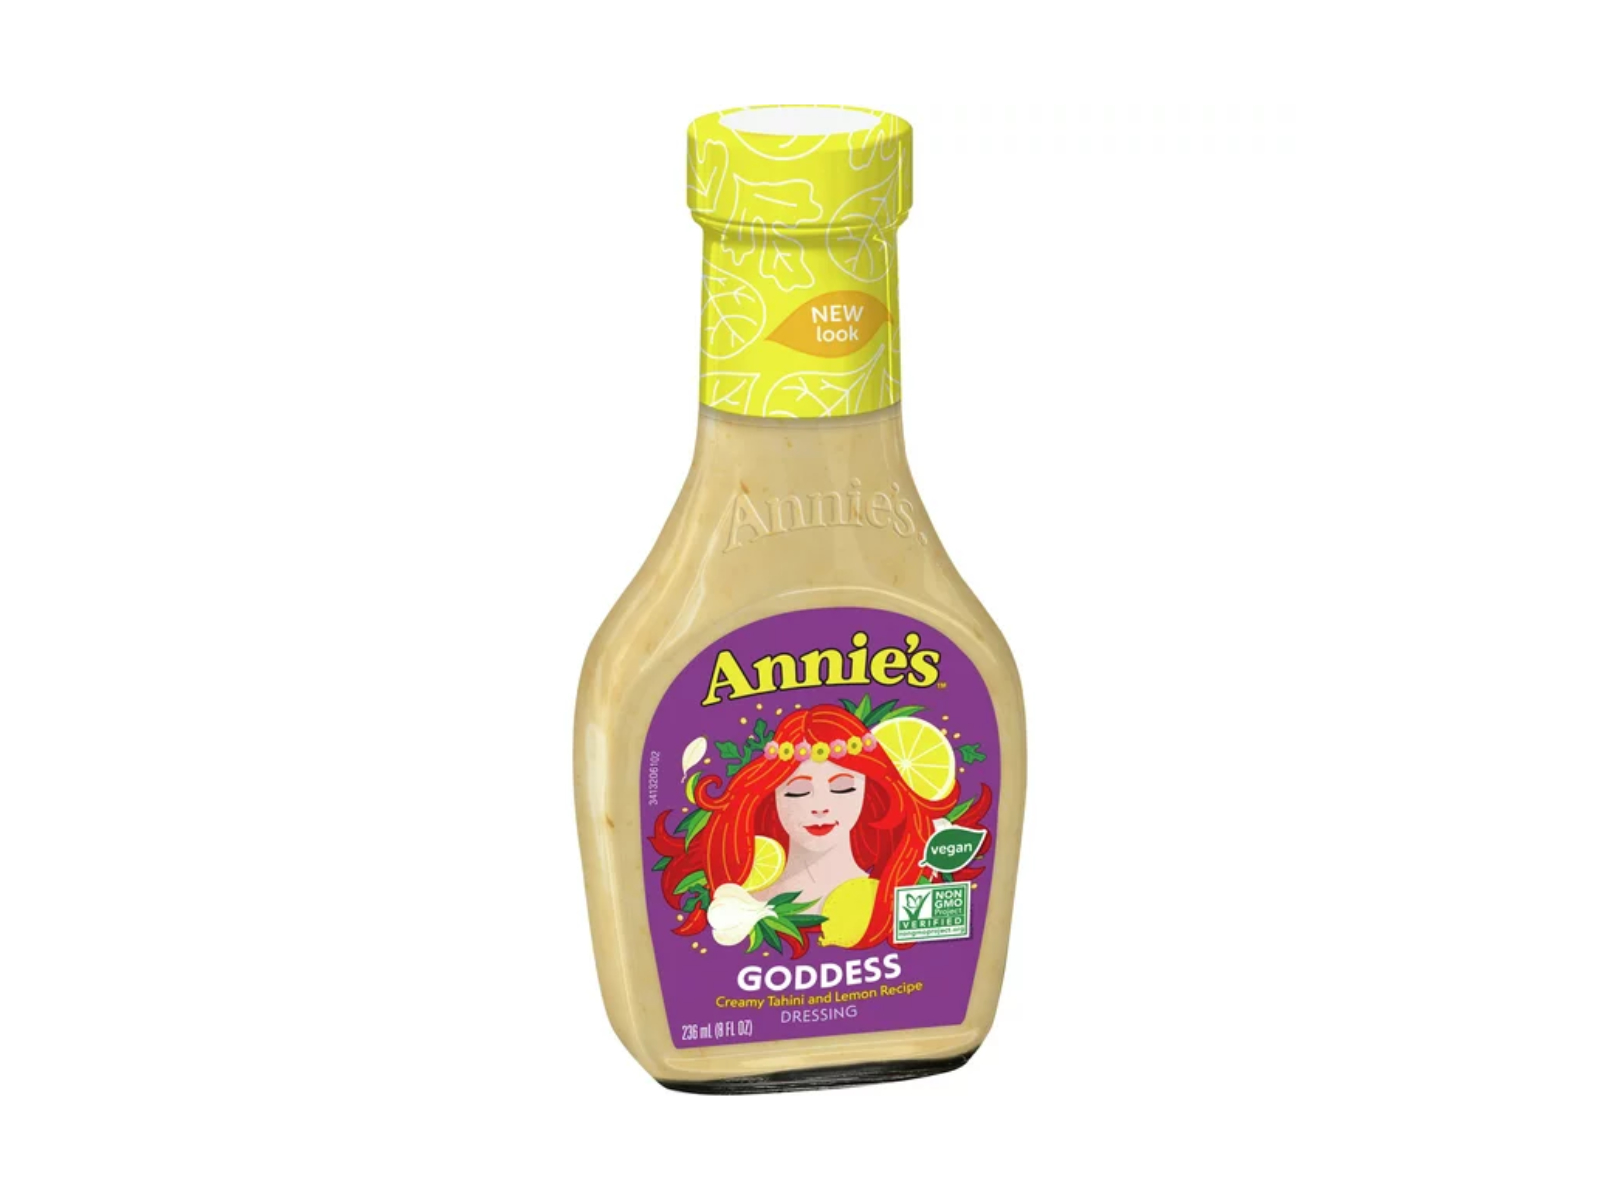 Annie’s Goddess Salad Dressing